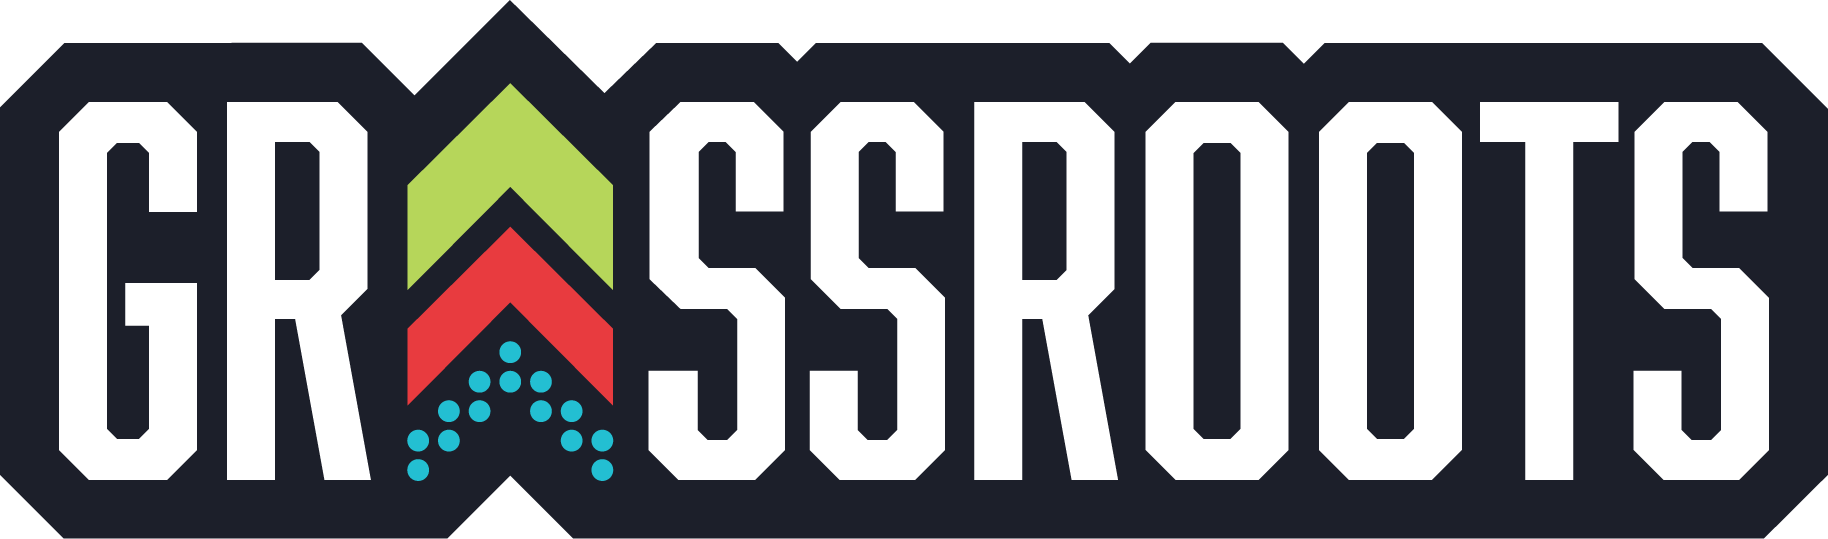 Grassroot logo